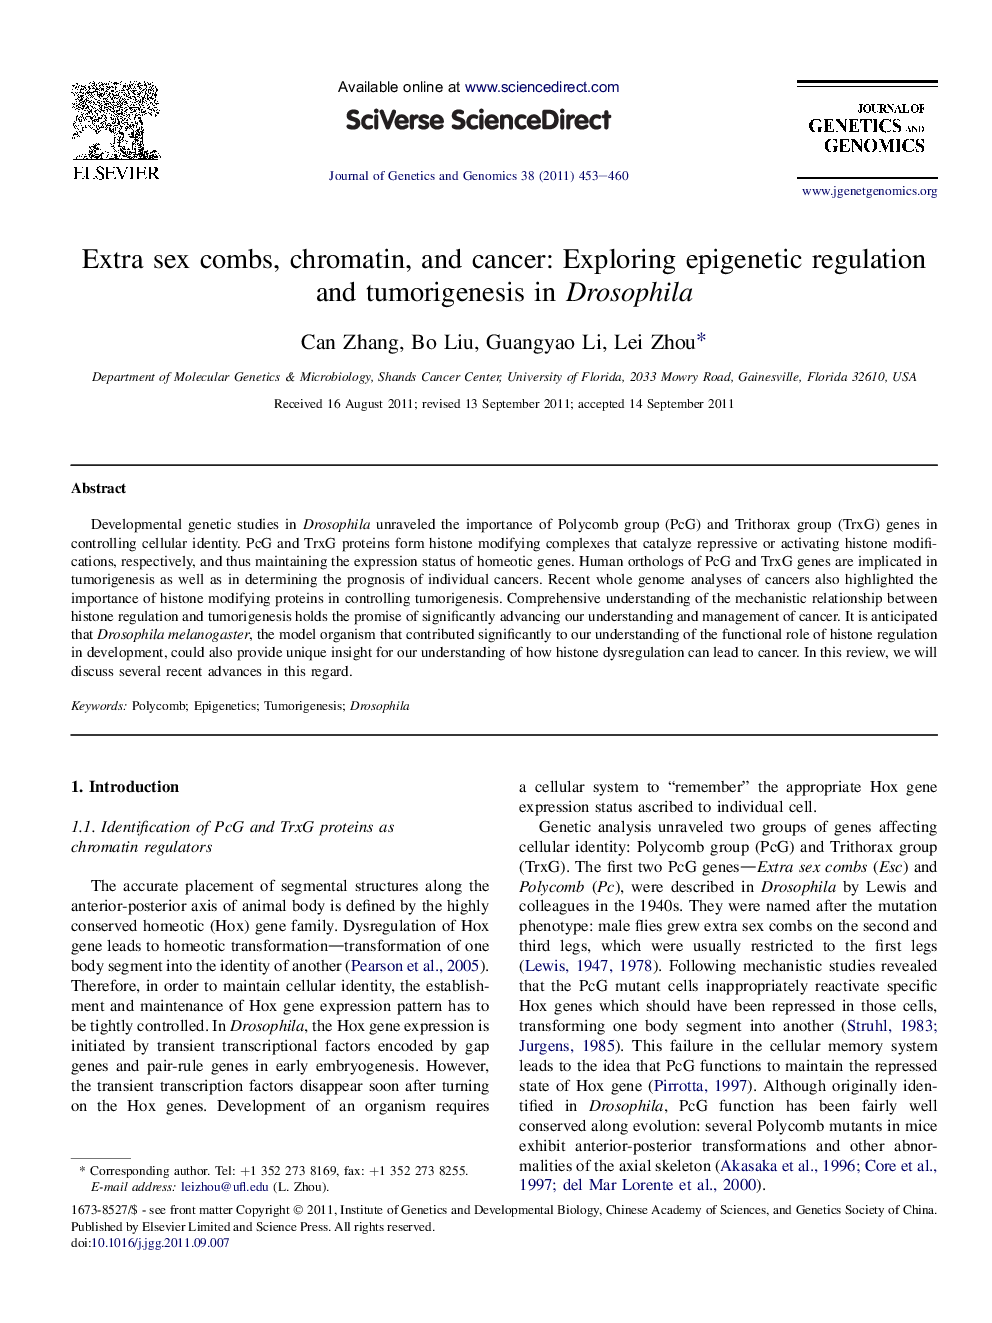 Extra sex combs, chromatin, and cancer: Exploring epigenetic regulation and tumorigenesis in Drosophila